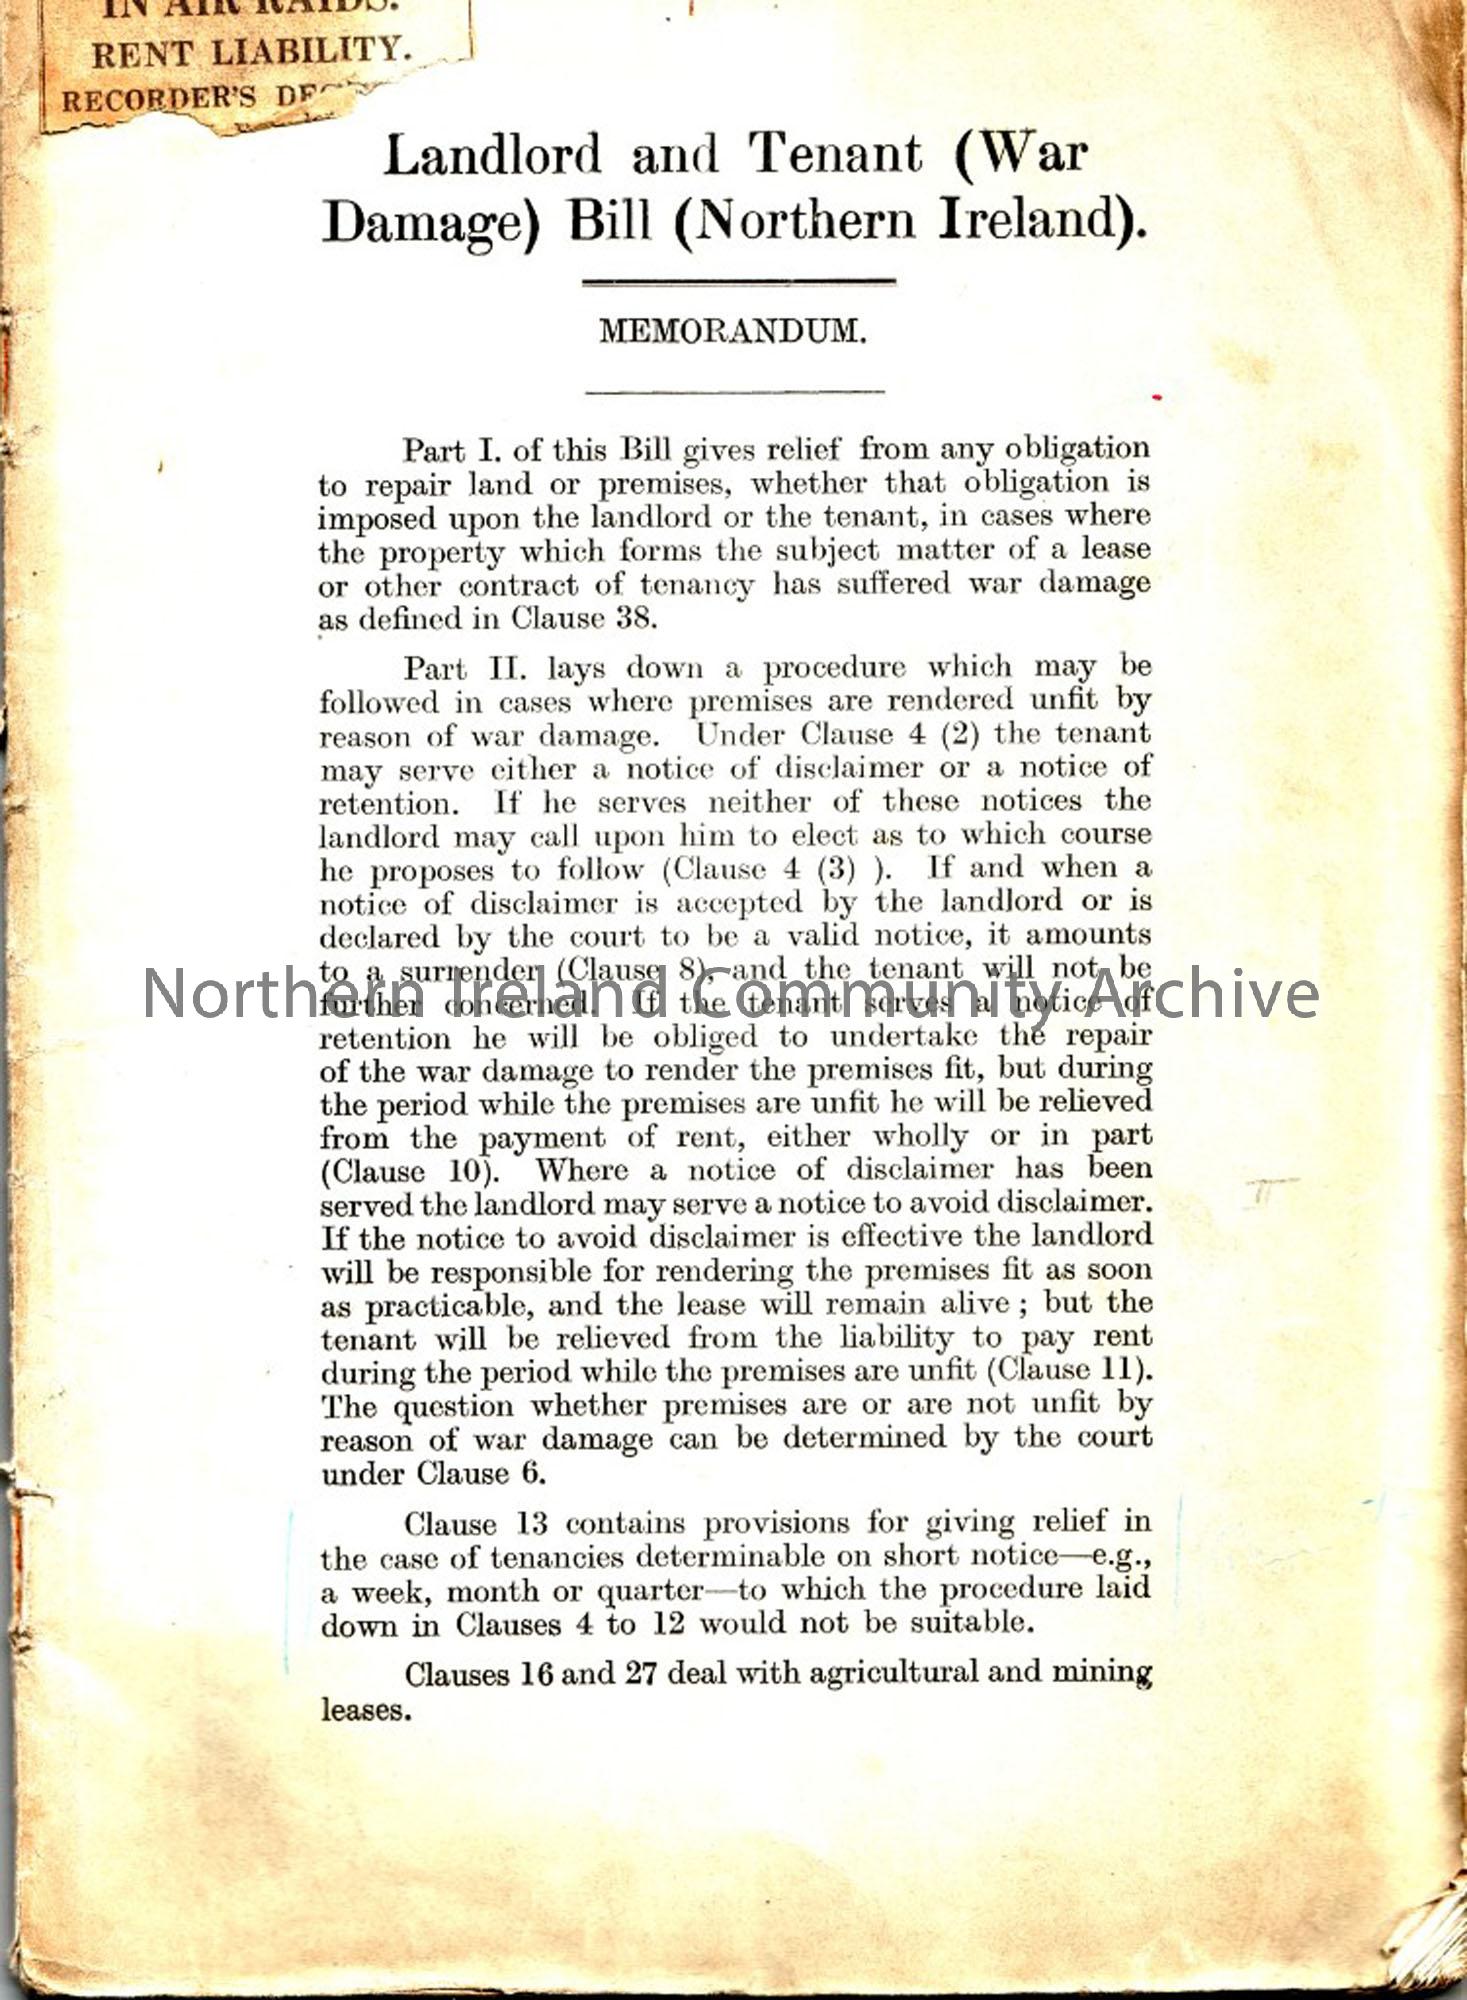 Landlord and Tenant (War Damage) Bill (Northern Ireland) 2nd & 10th September 1941